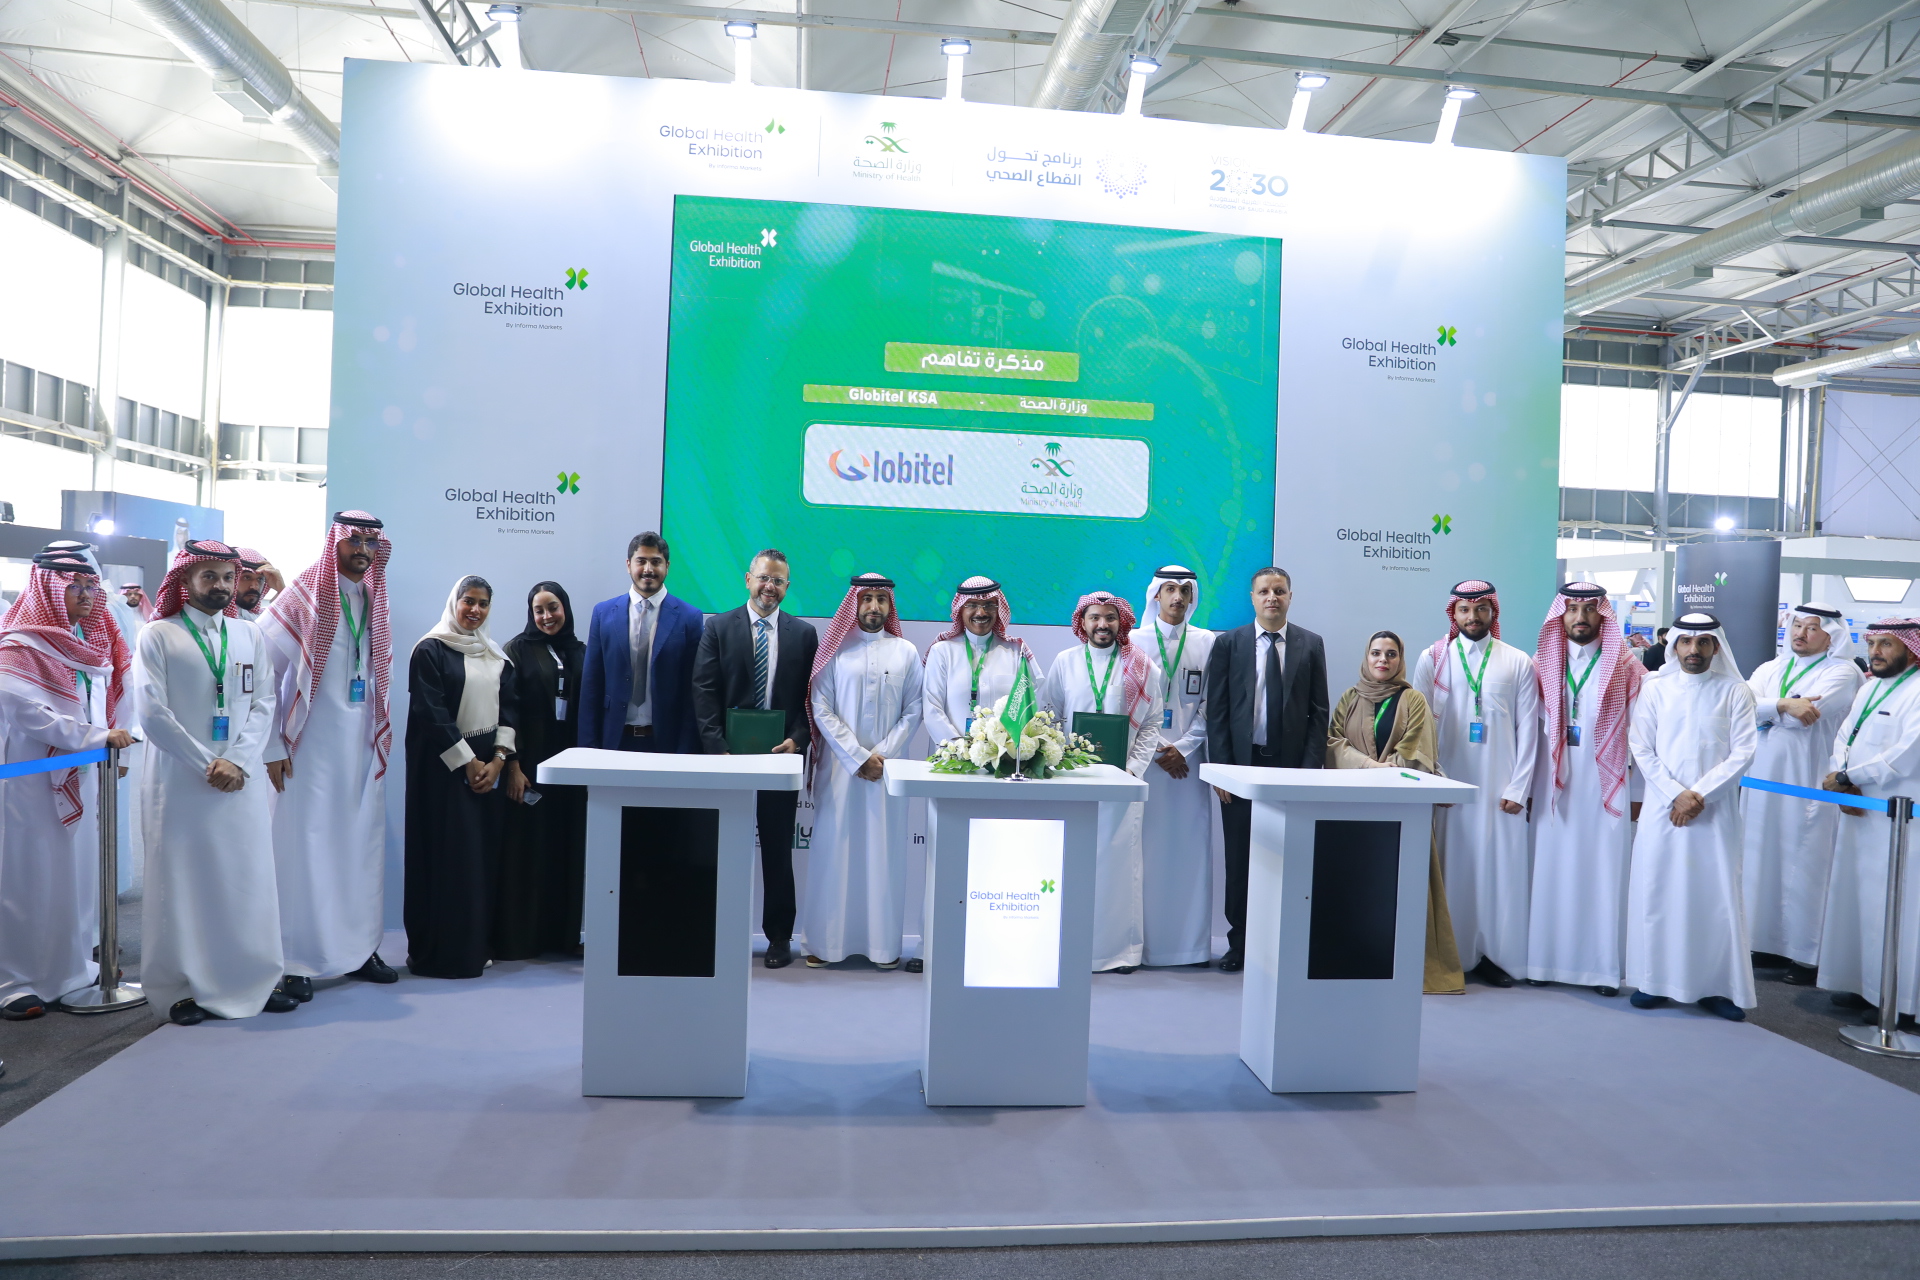 Ministry of Health Saudi Arabia and Globitel Partnership